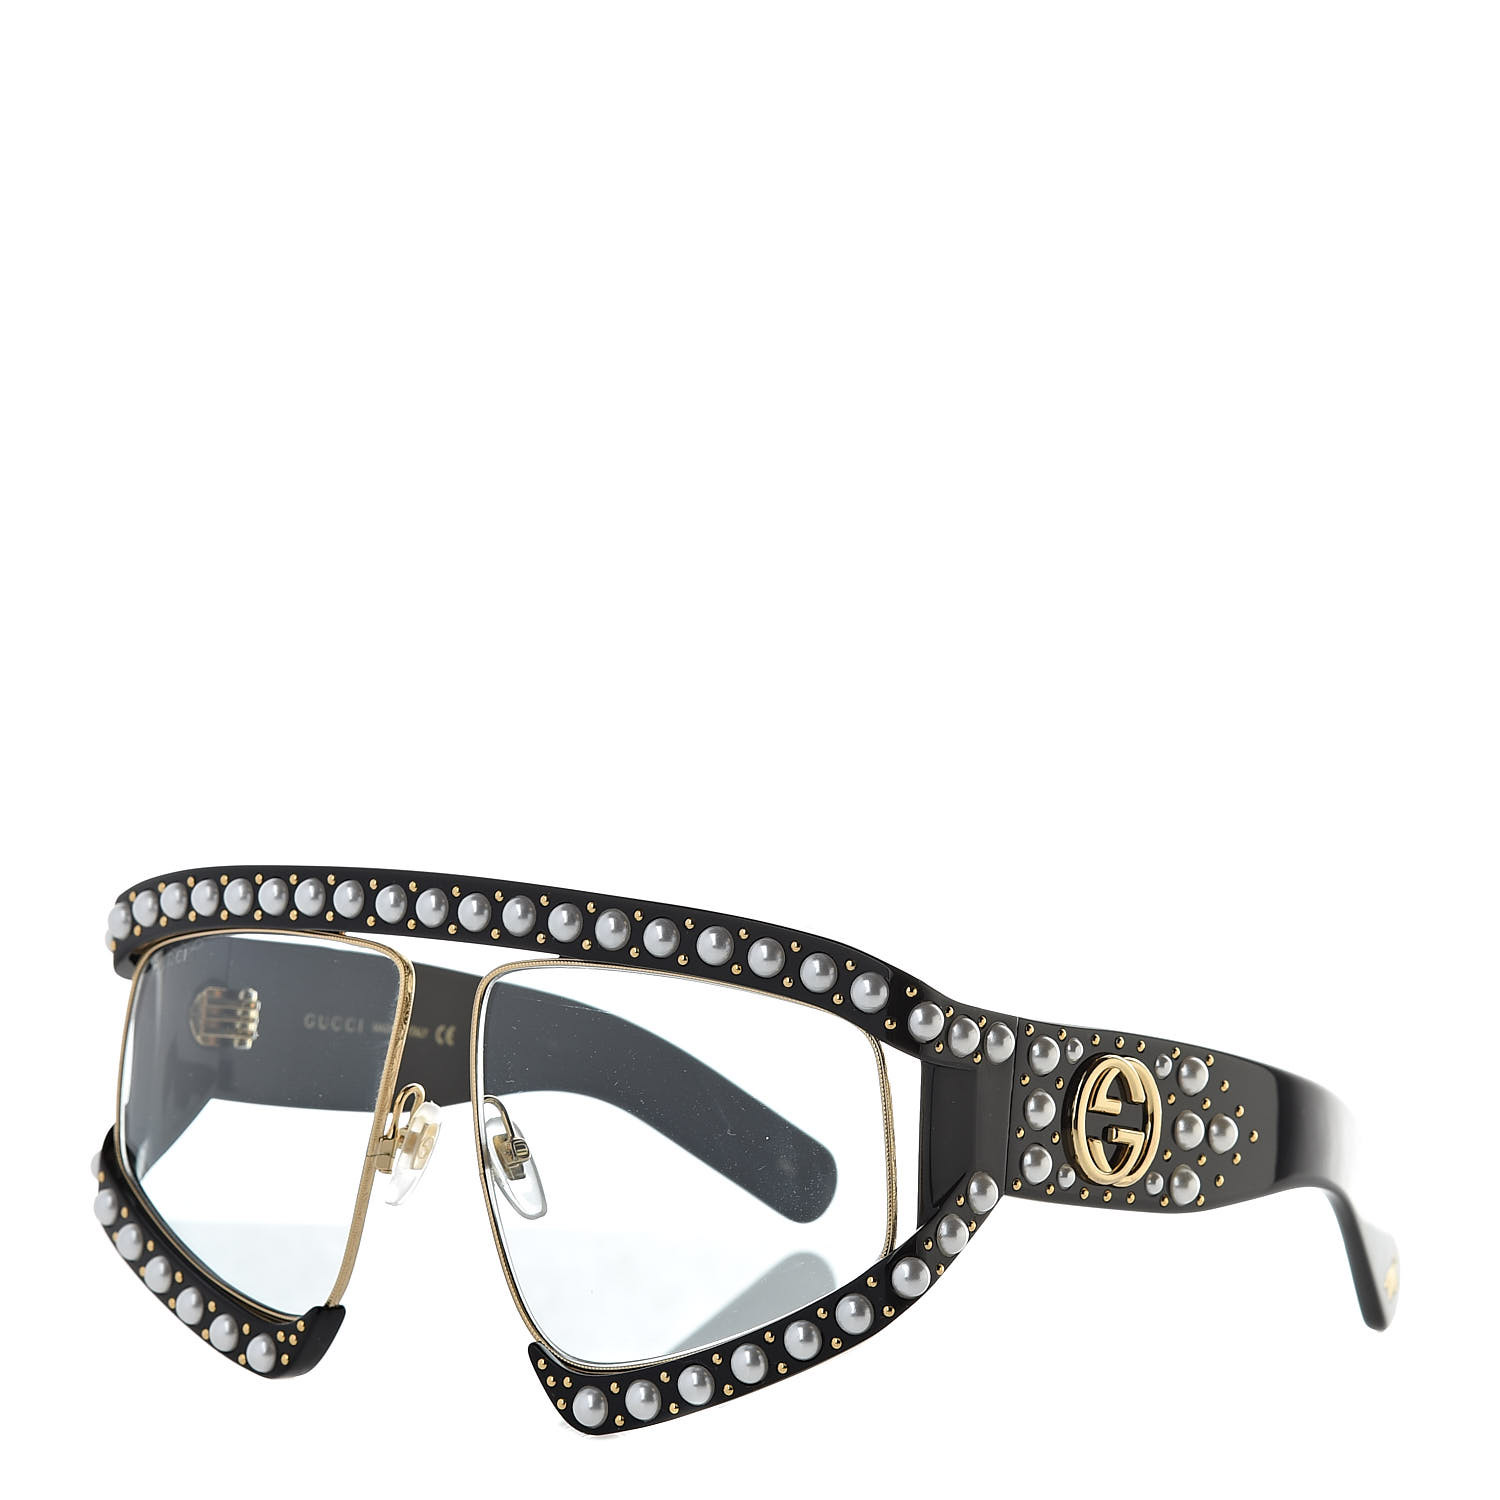 Gucci Acetate Pearl Rectangular Frame Sunglasses Gg0234s Black 511613 